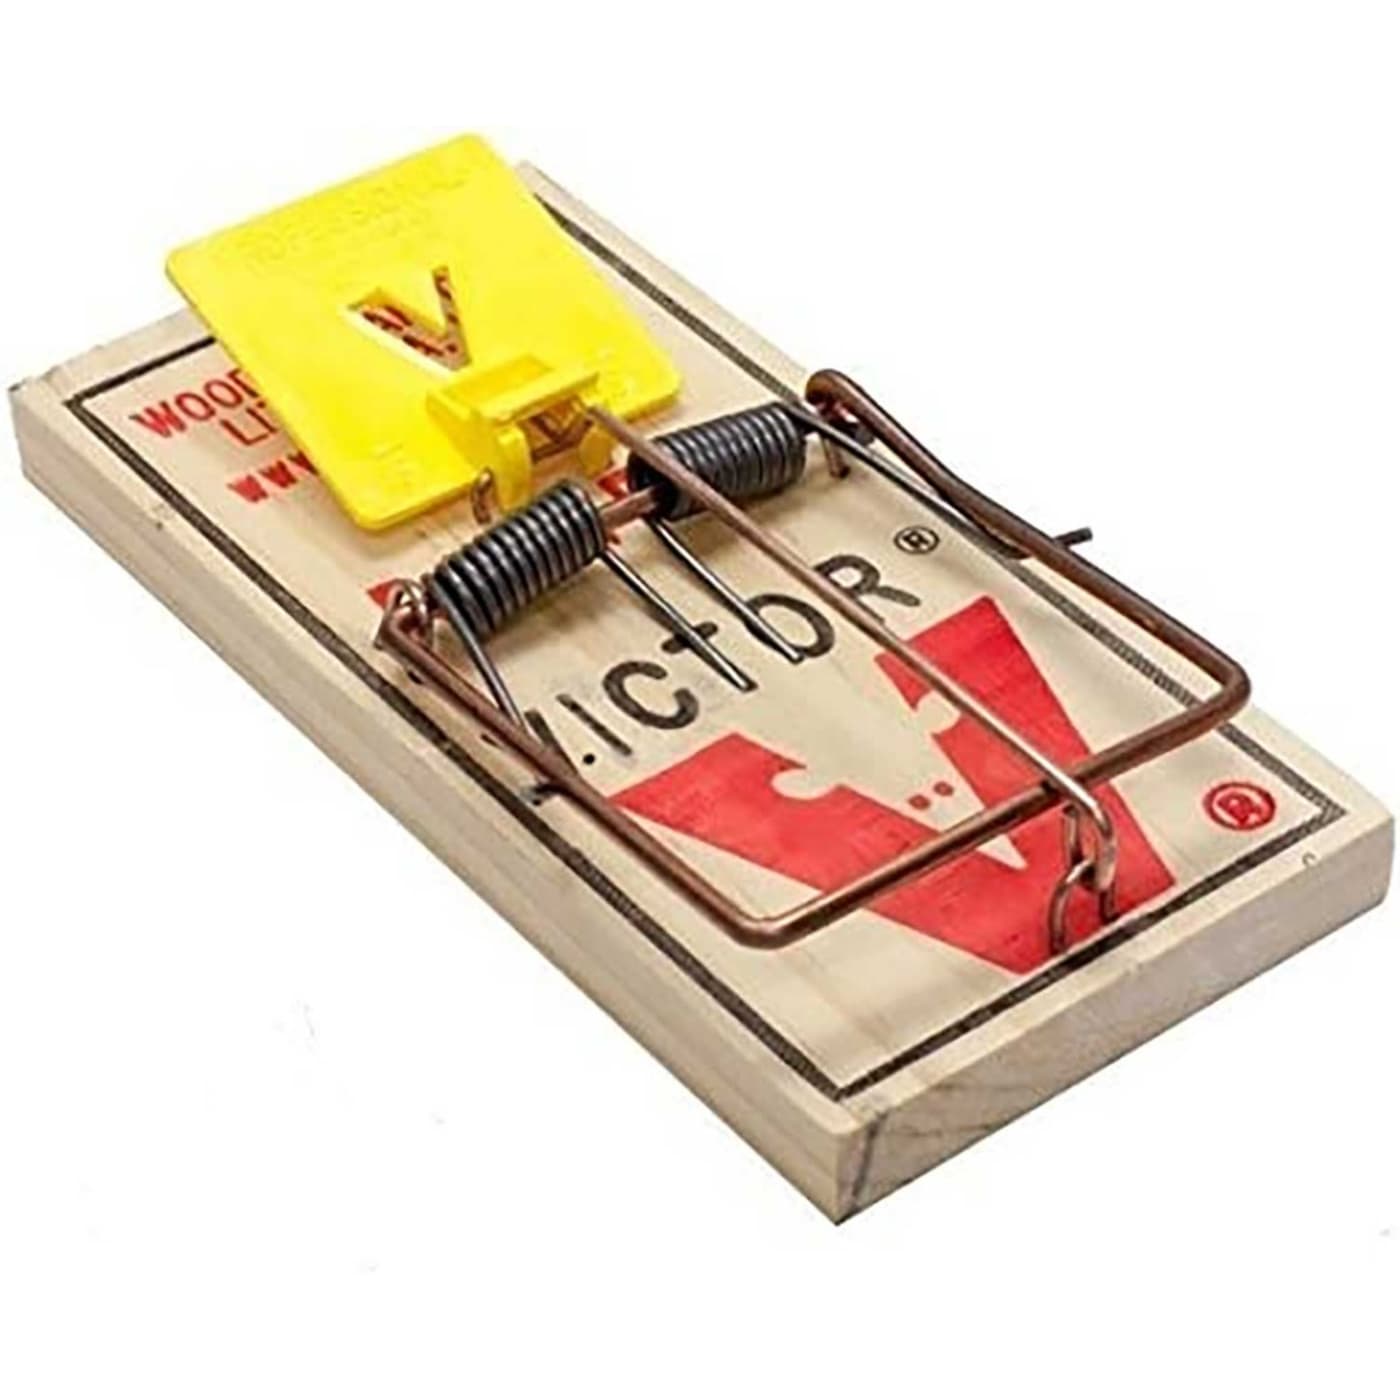 Victor Mouse Traps, Plastic Pedal, Pre-Baited - 4 traps